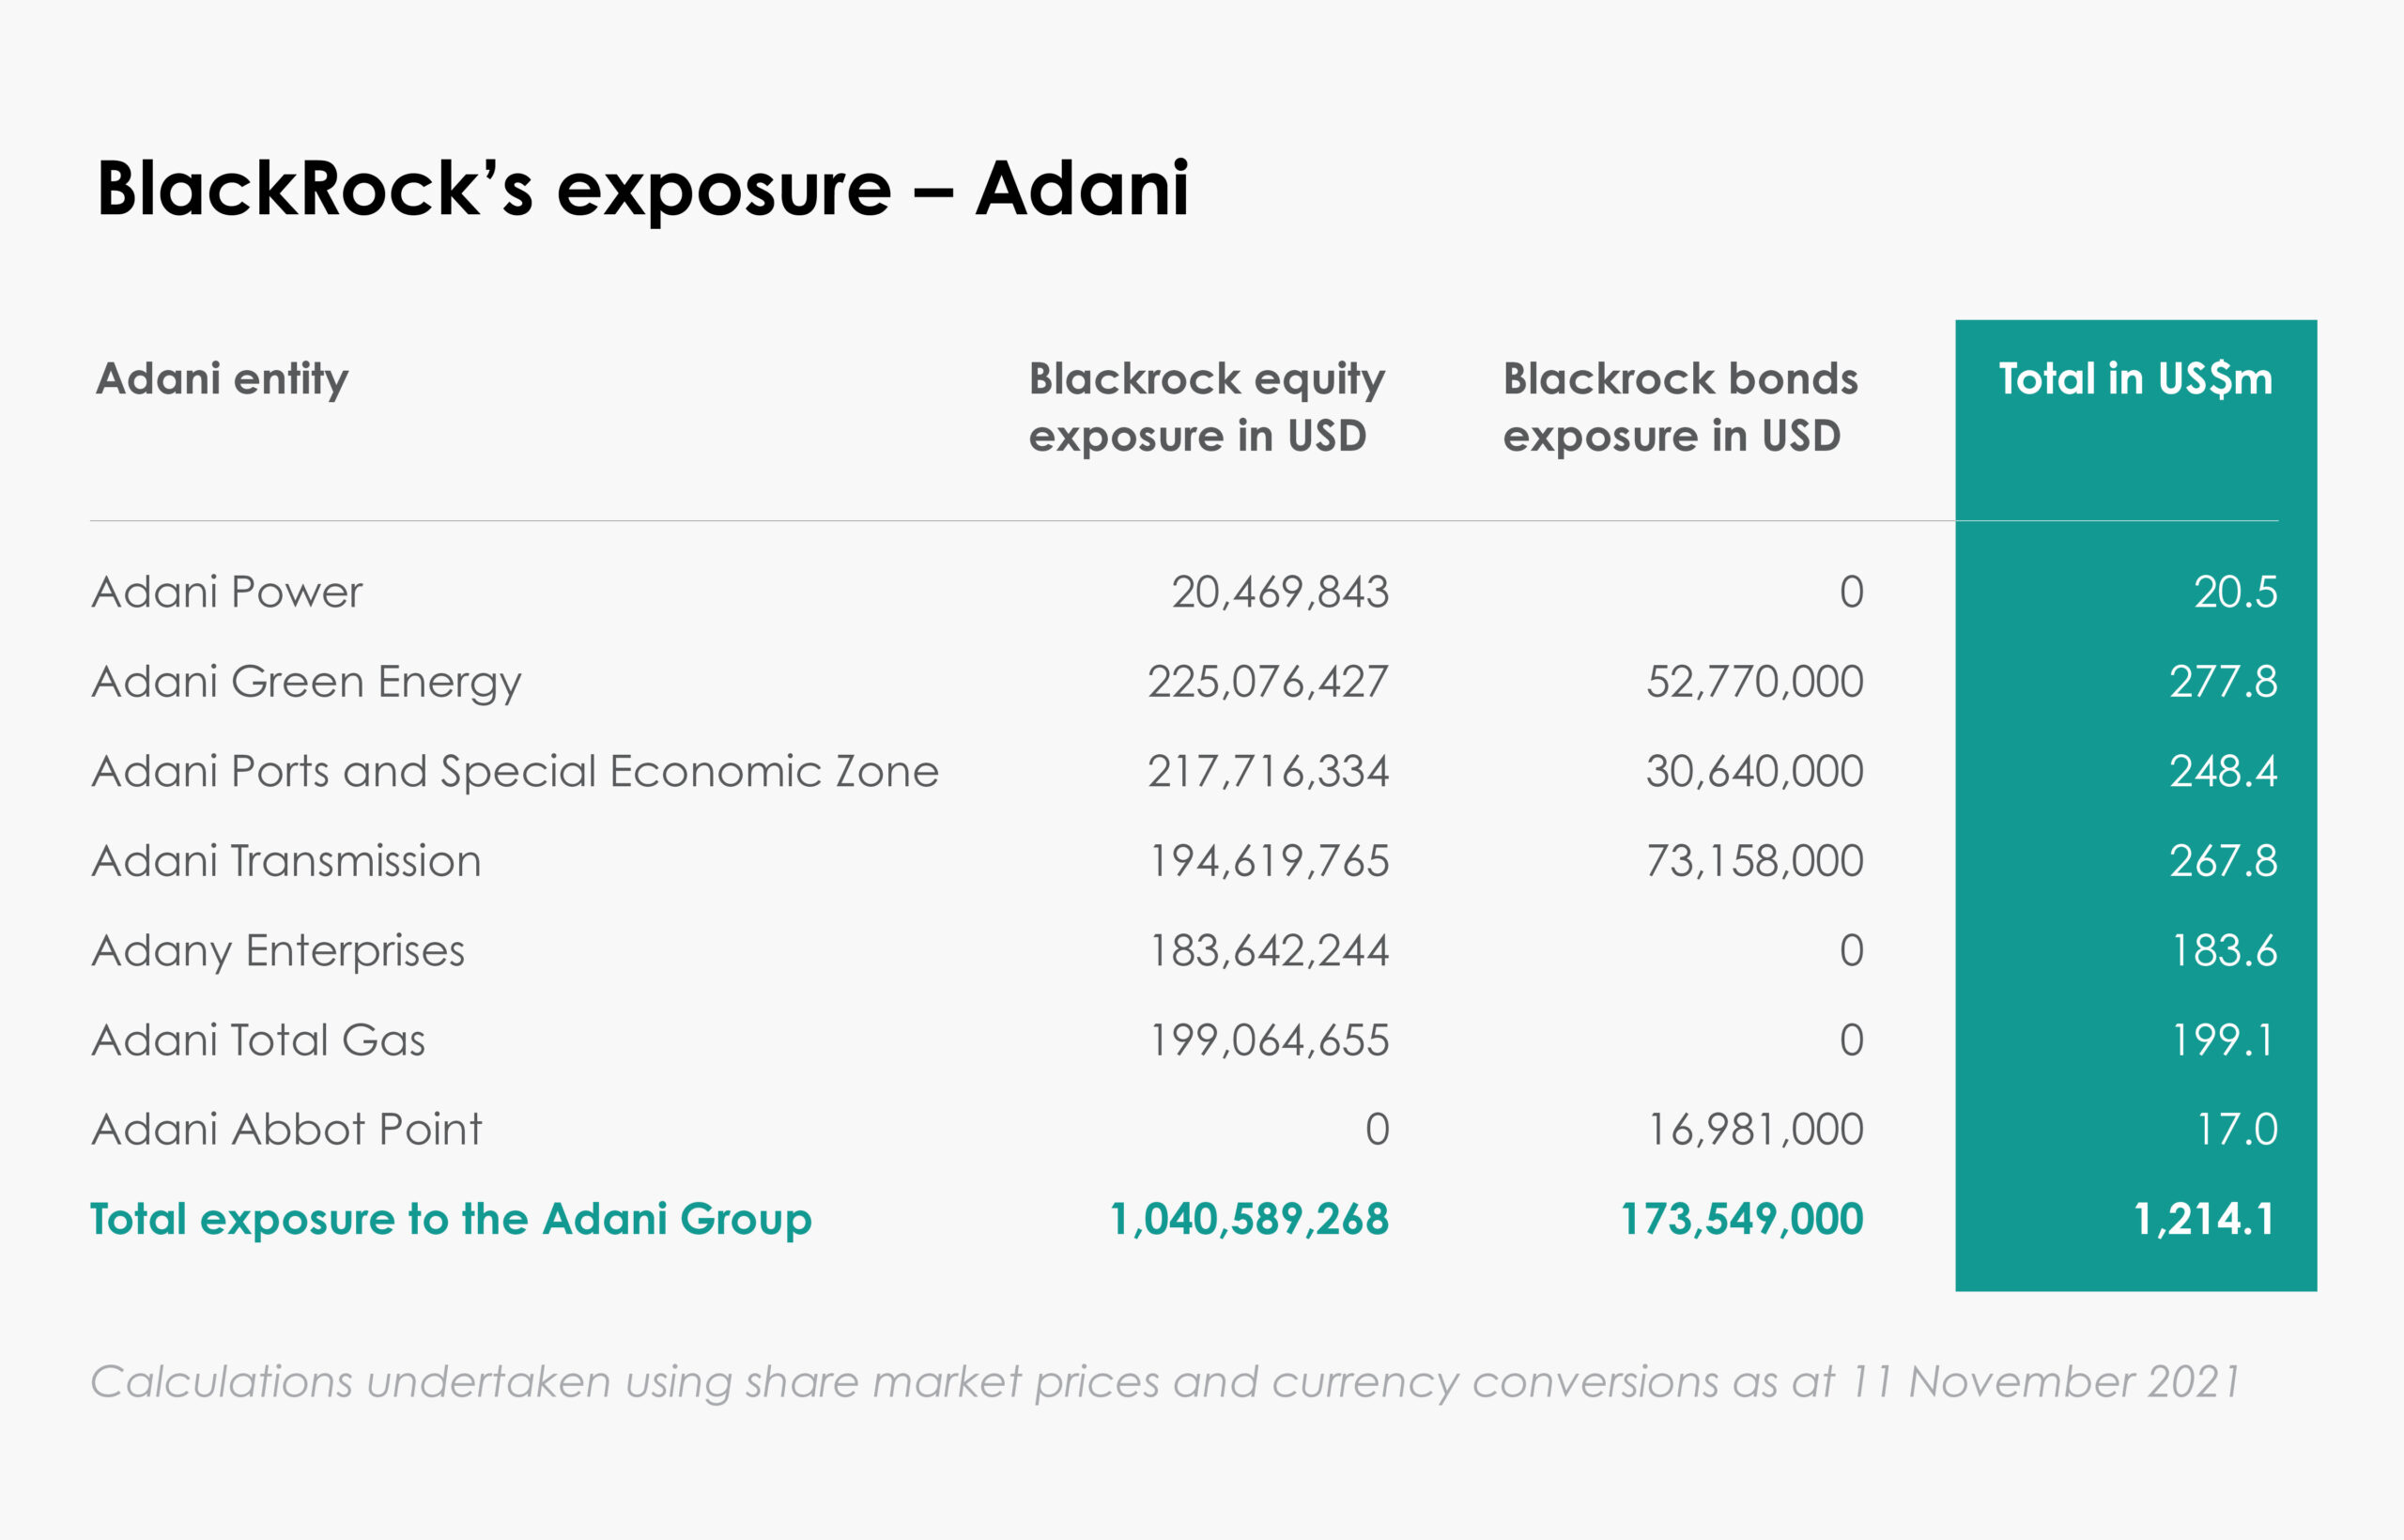 BlackRock's exposure - Adani